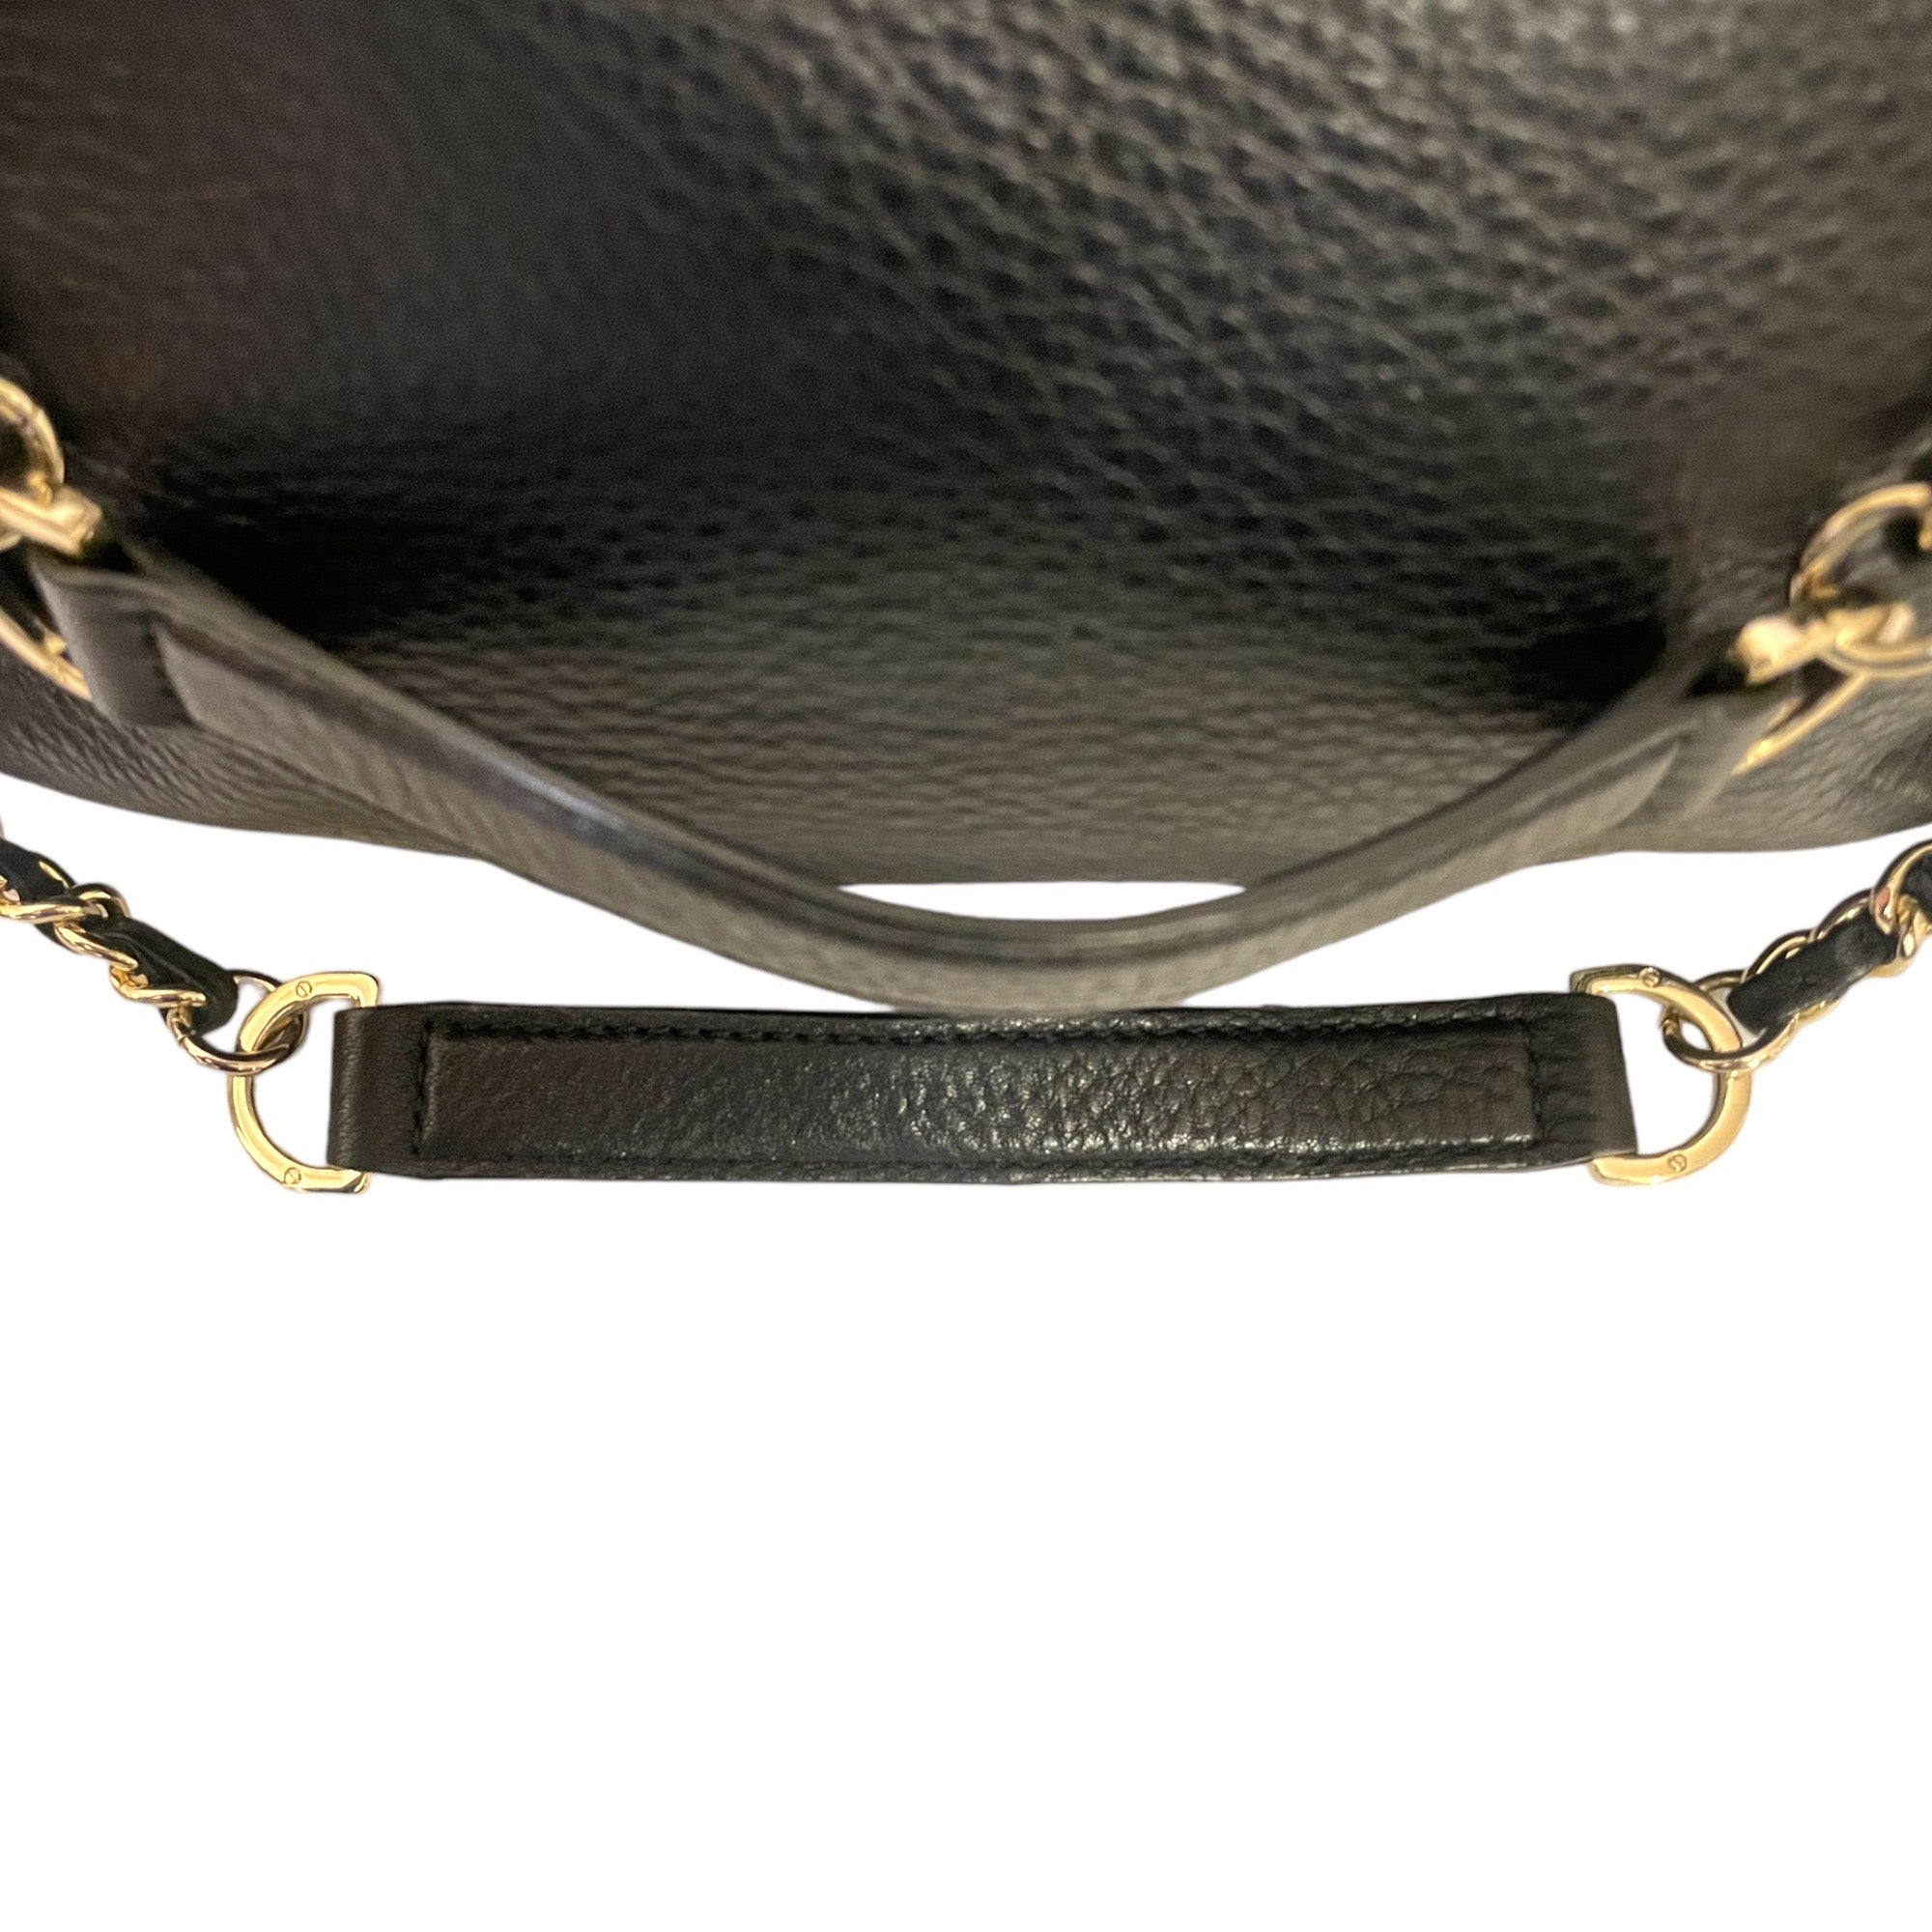 TORY BURCH Chain Link/Leather Crossbody/Shoulder Bag